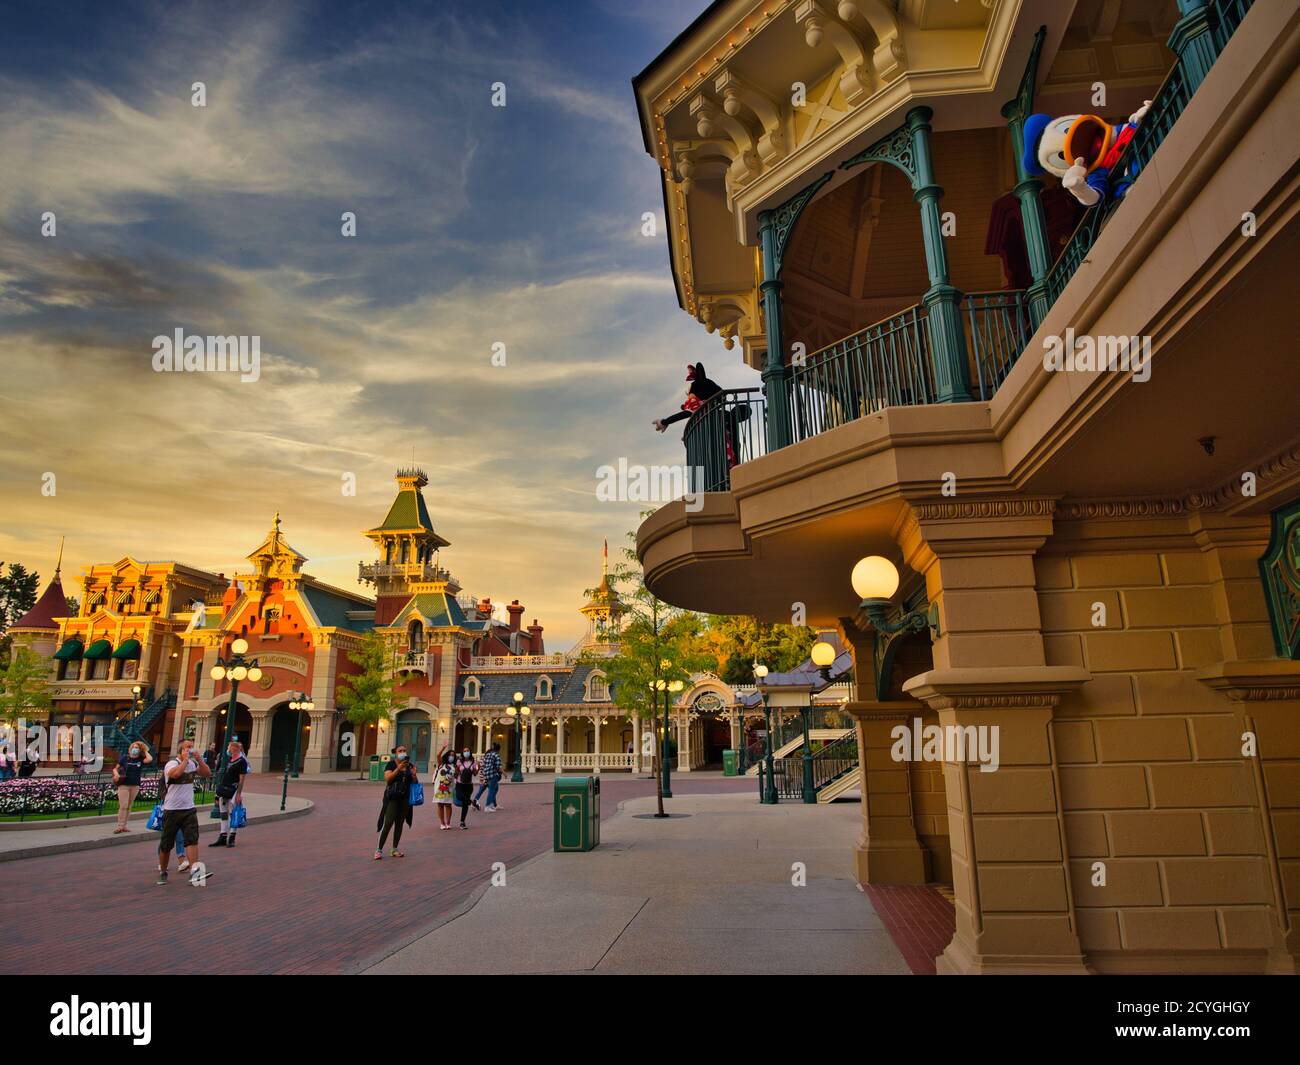 Characters greeting guests, Disneyland Paris, Marne-la-Vallée, Paris, France, Europe Stock Photo